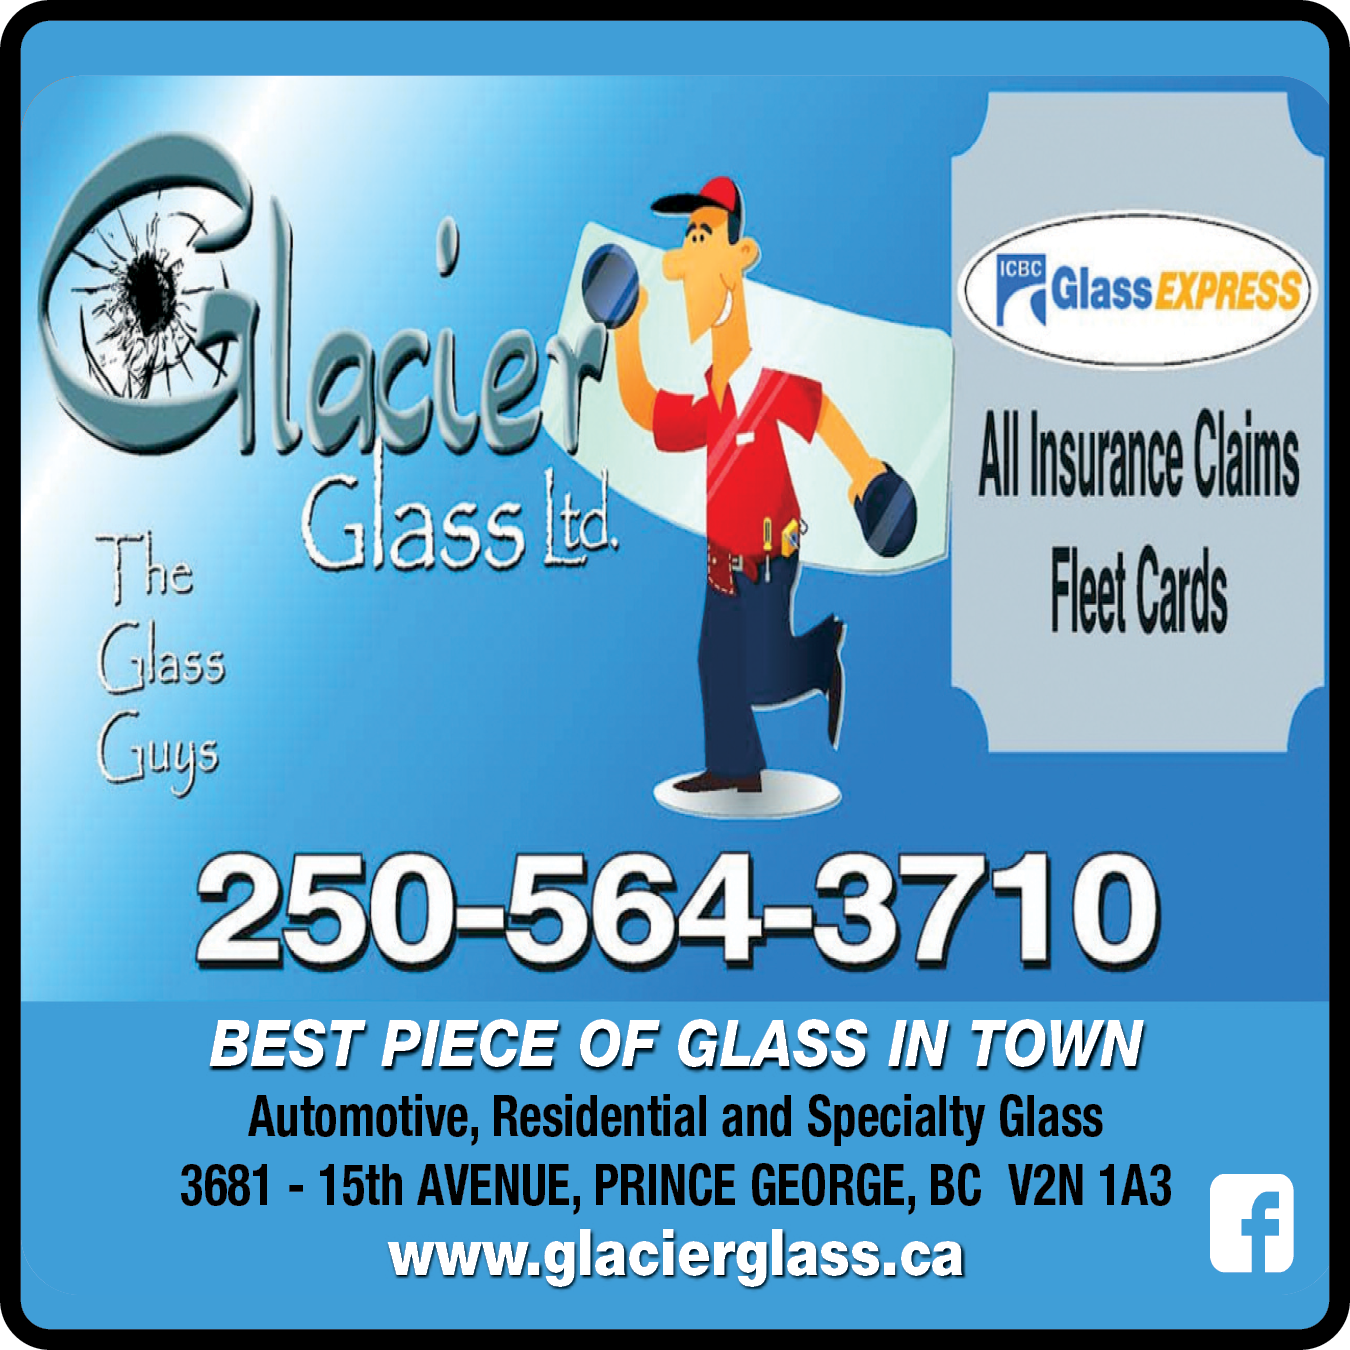 Glacier Glass Ltd